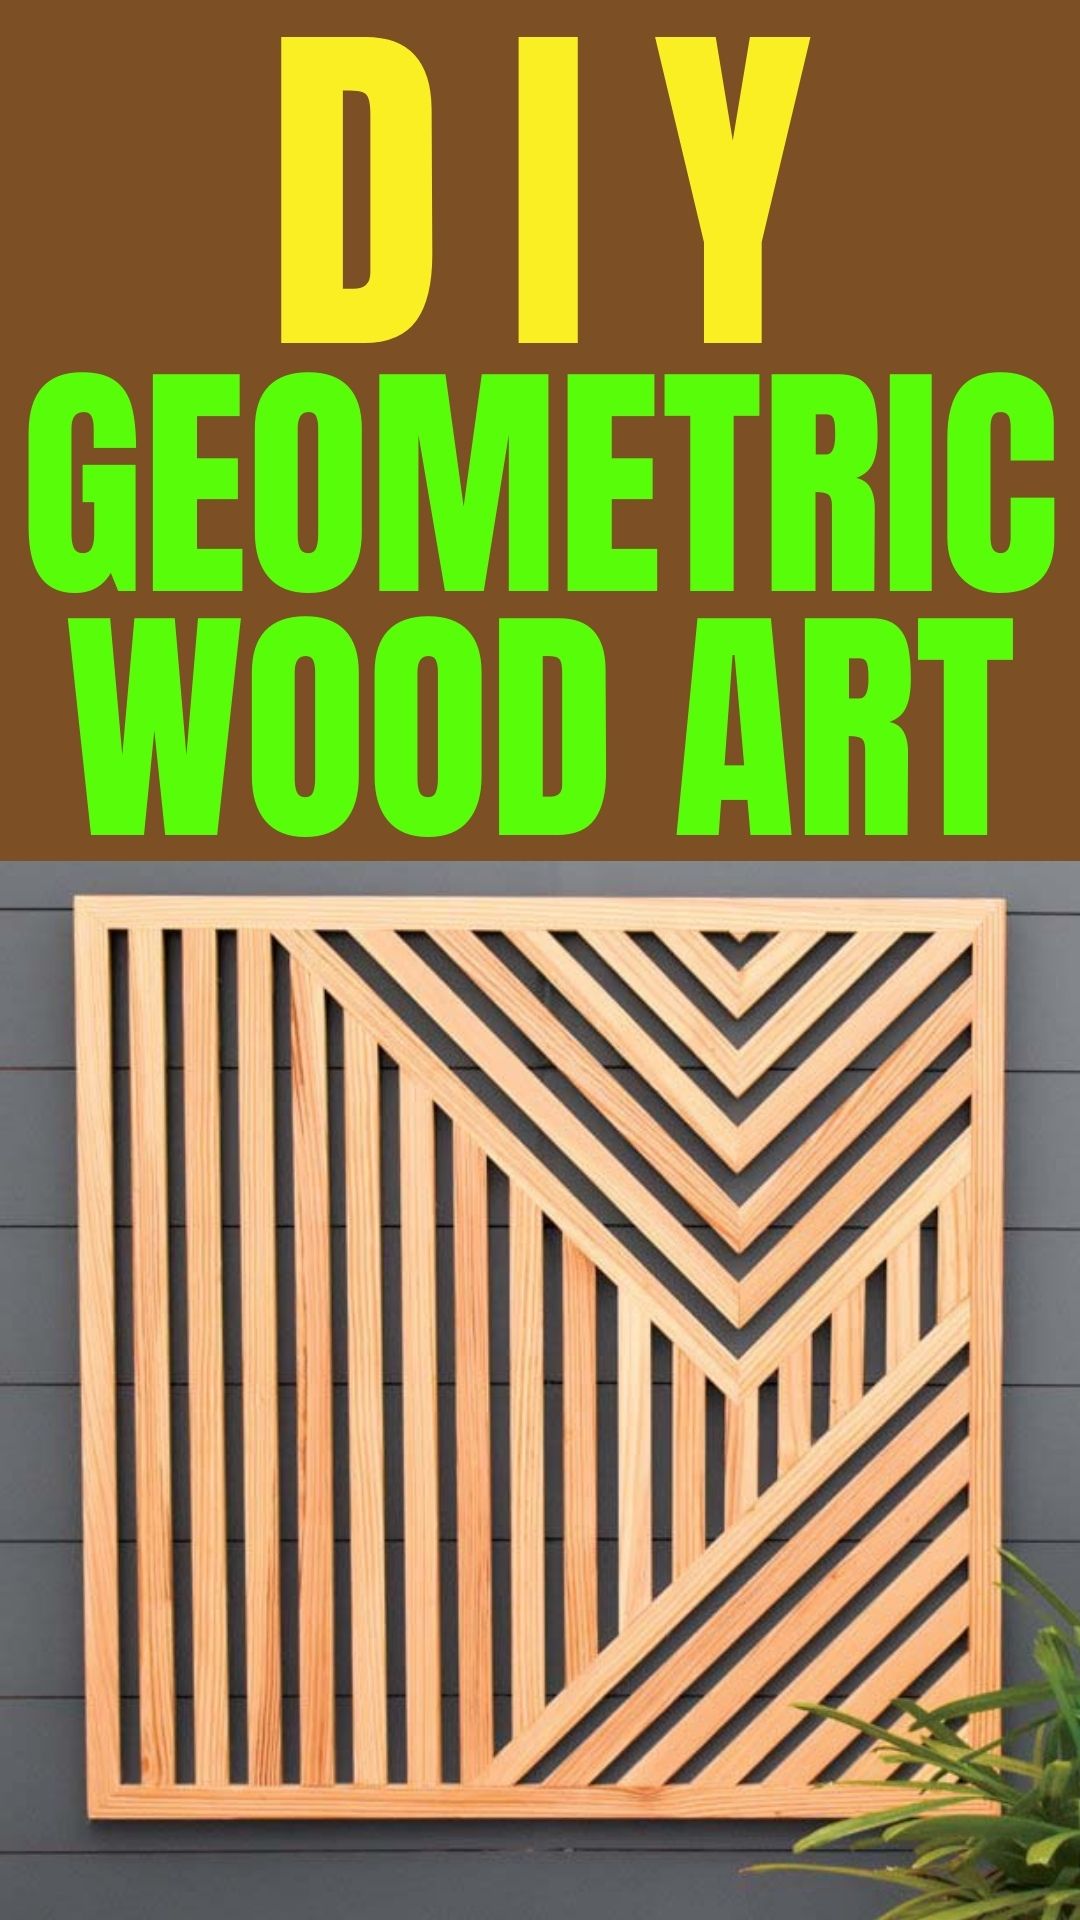 DIY geometric wood art